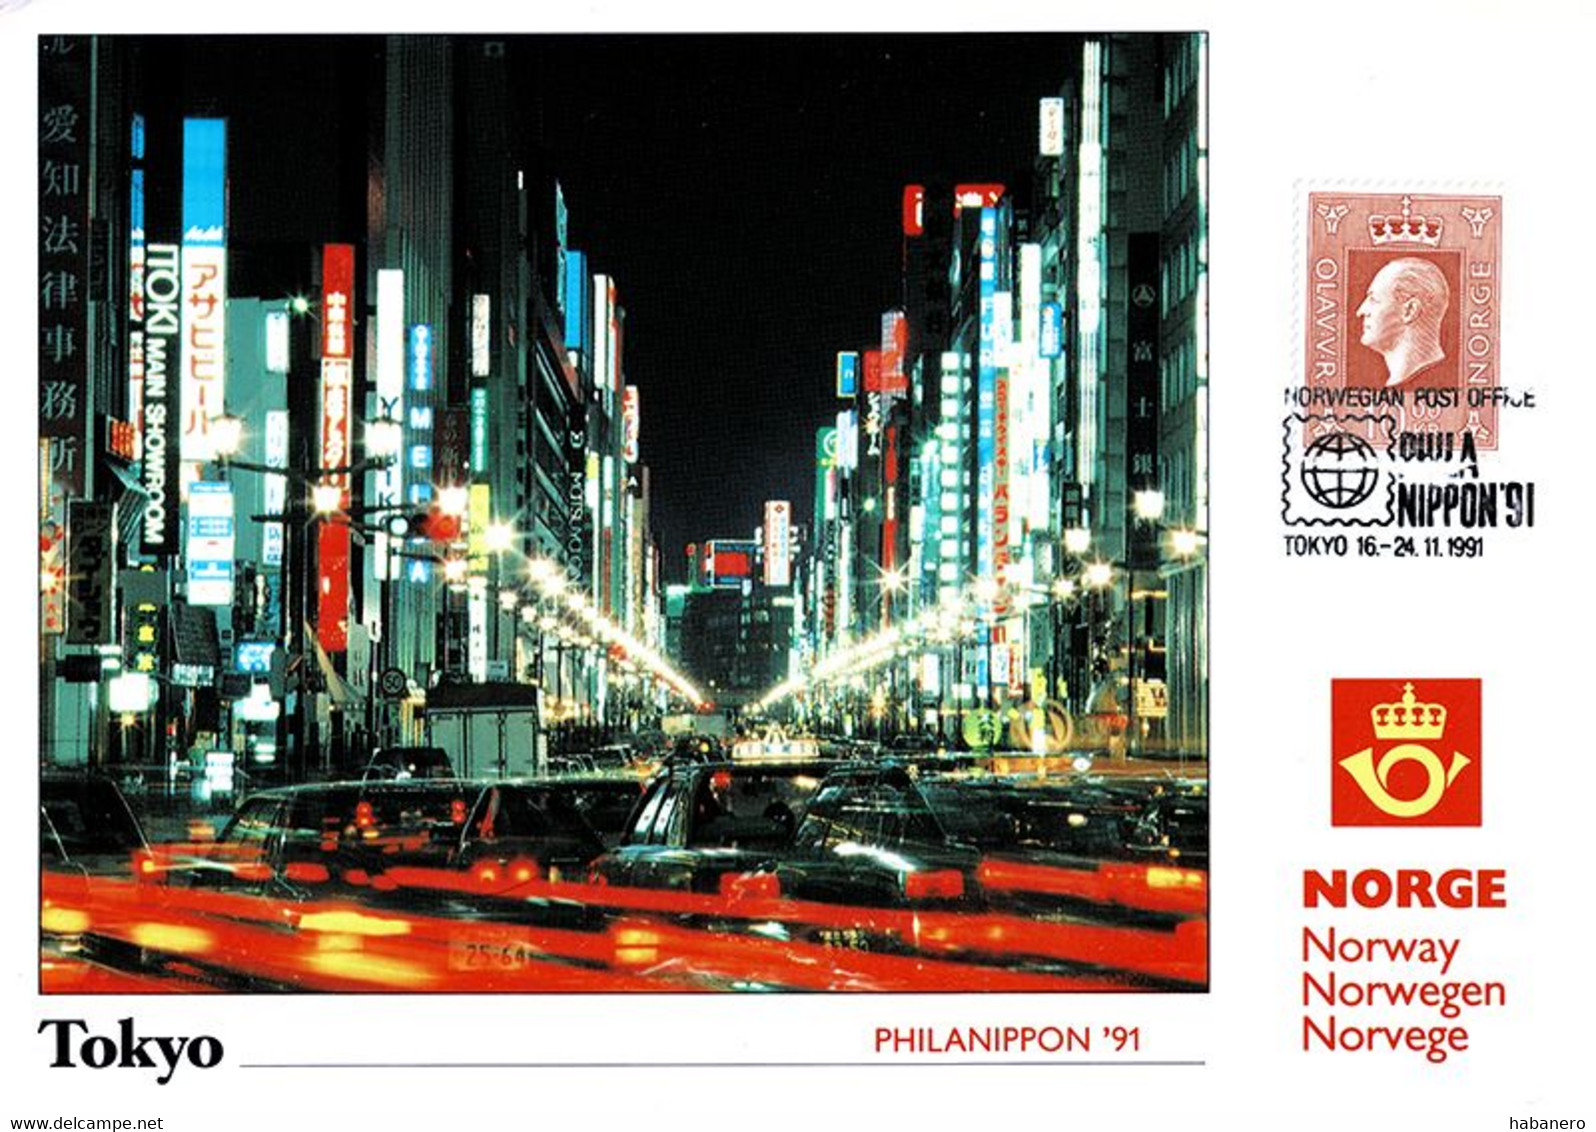 NORWAY 1991 PU88 PHILANIPPON '91 TOKYO EXHIBITION CARD - Cartes-maximum (CM)